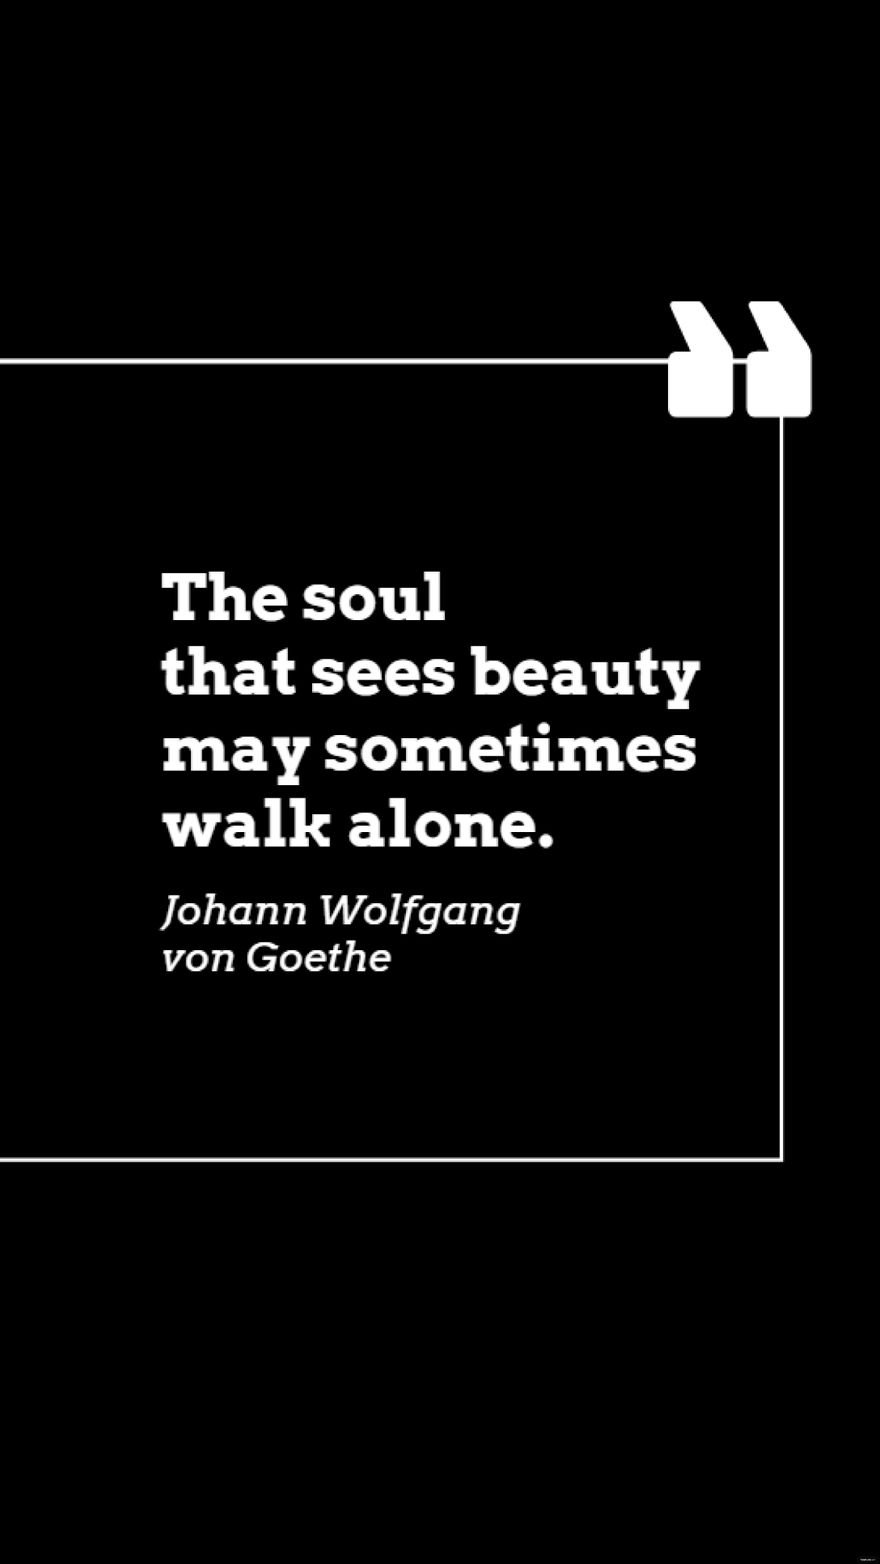 Free Johann Wolfgang von Goethe - The soul that sees beauty may sometimes walk alone. in JPG